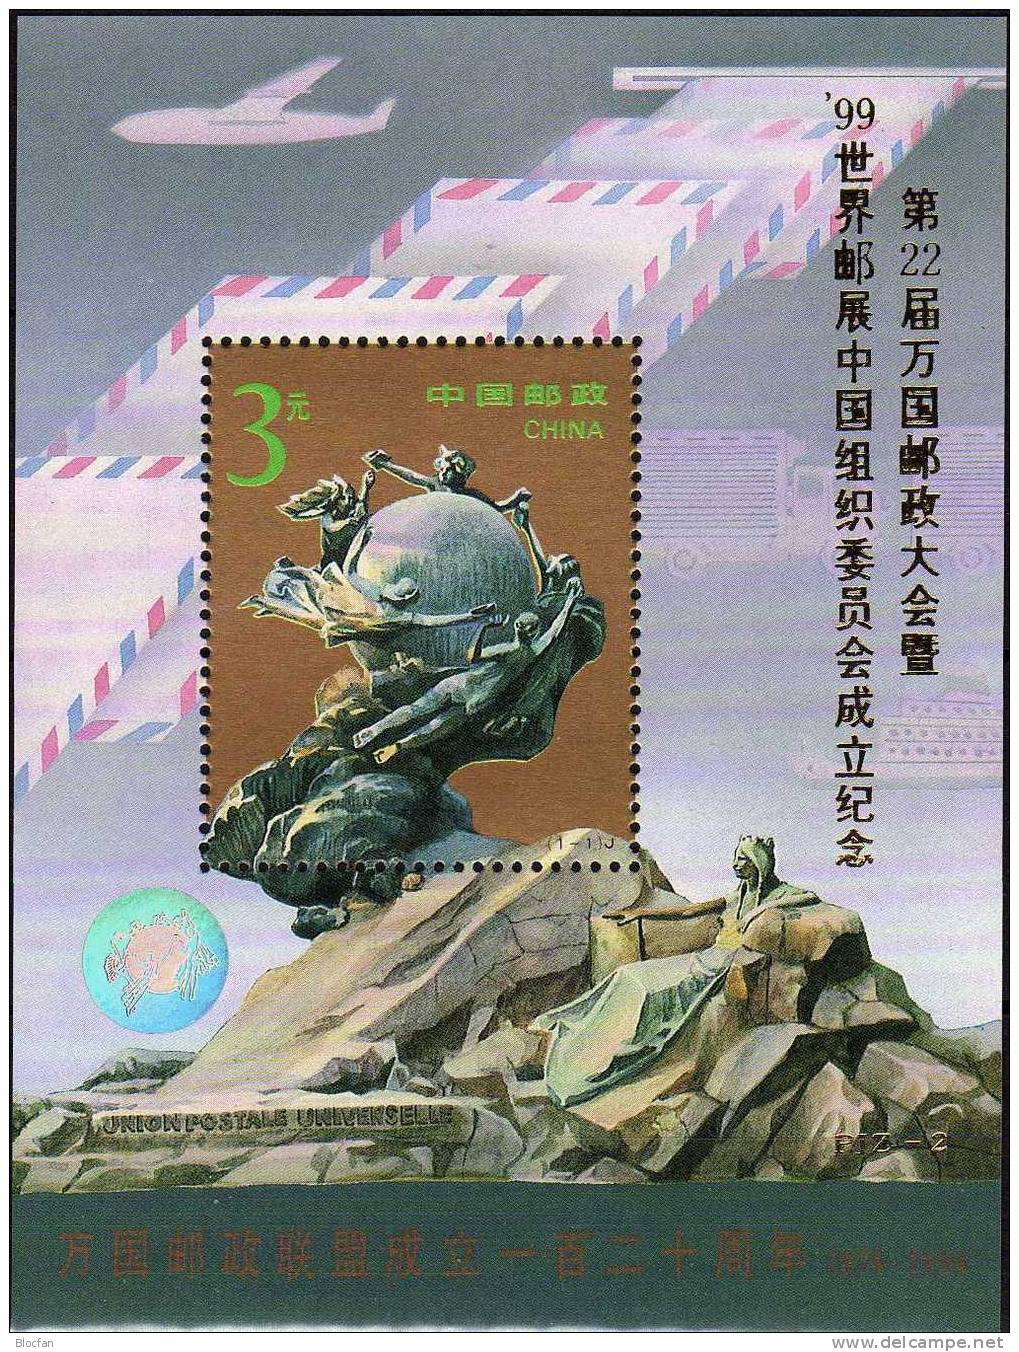 Exposition 1999 Hologramm UPU Emblem China 2564, Block 67 I plus No. ** 29€ Weltpostkongreß Overprint in gold Code PJZ-2